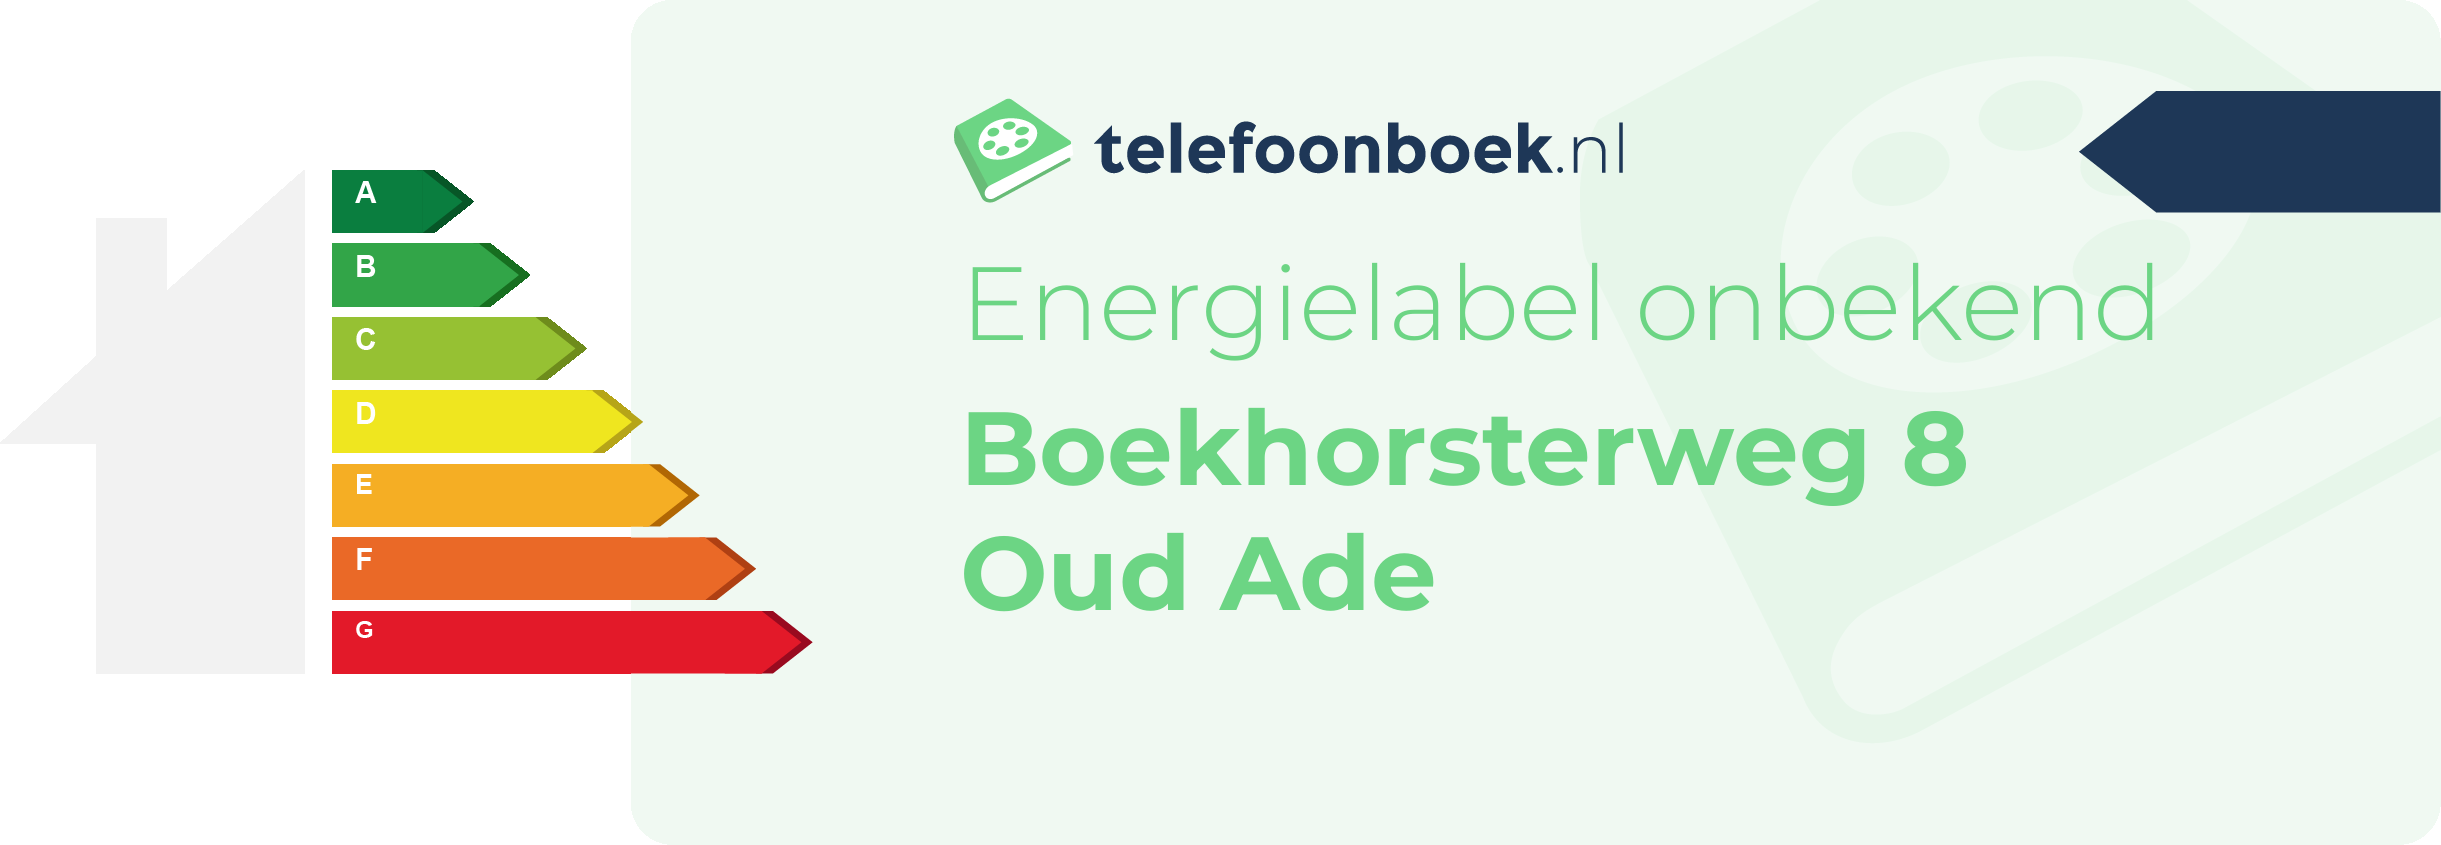 Energielabel Boekhorsterweg 8 Oud Ade